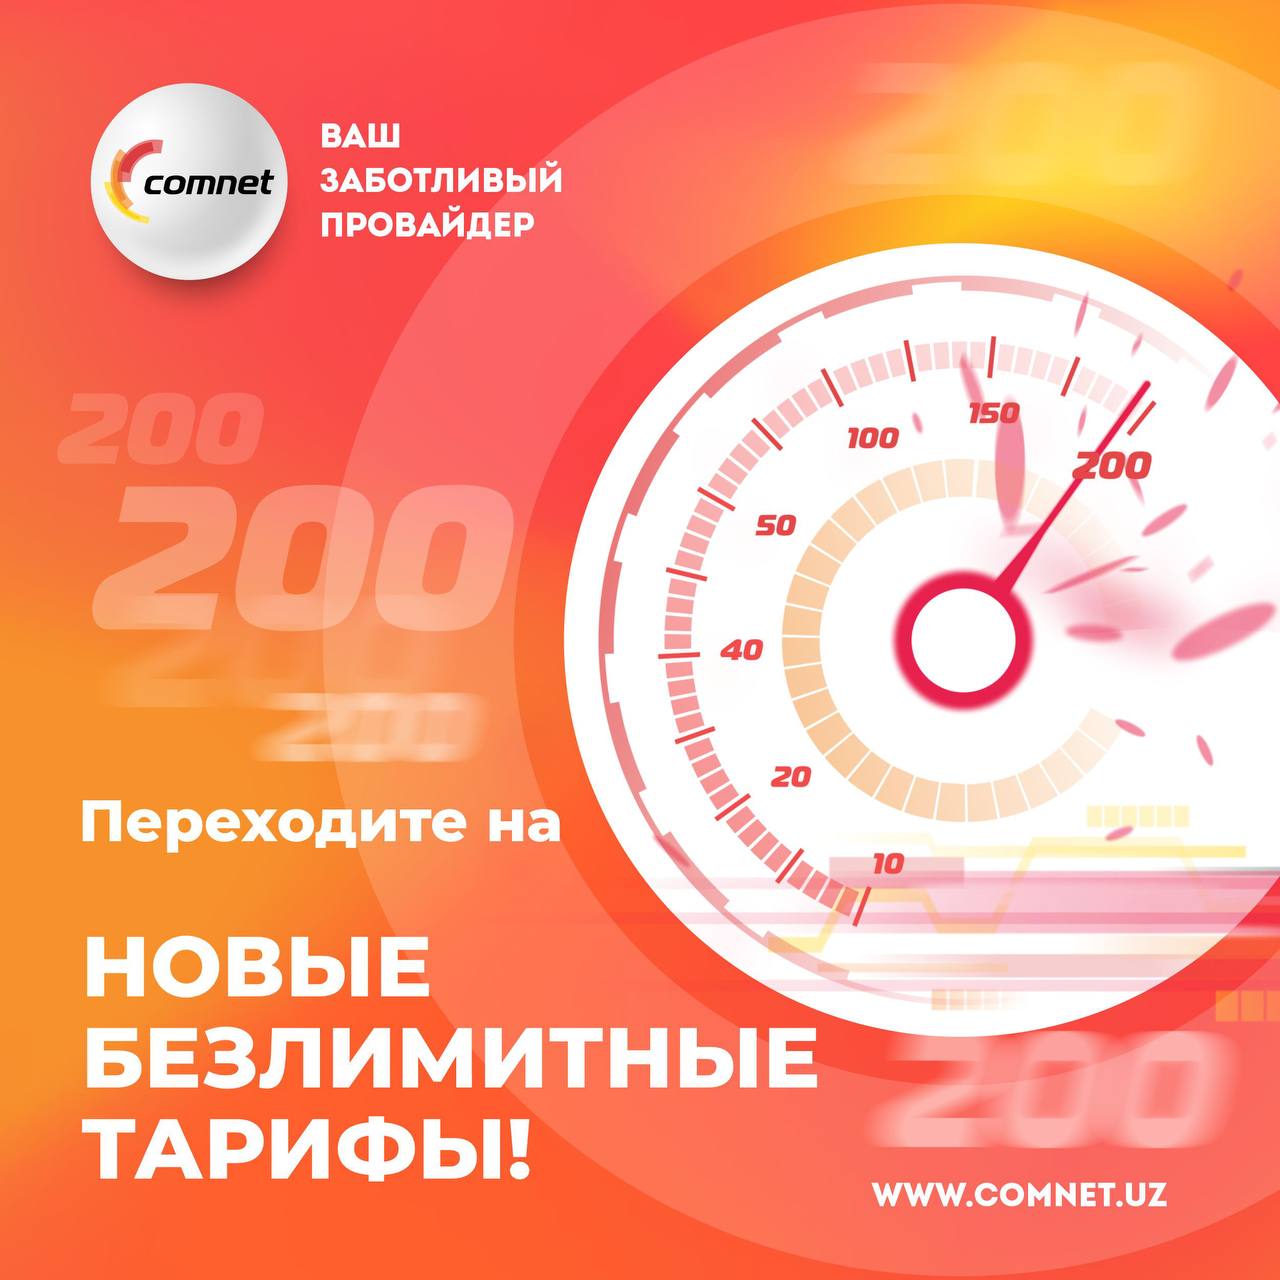 Comnet uz. Комнет. COMNET логотип. COMNET Ташкент. Комнет провайдер.